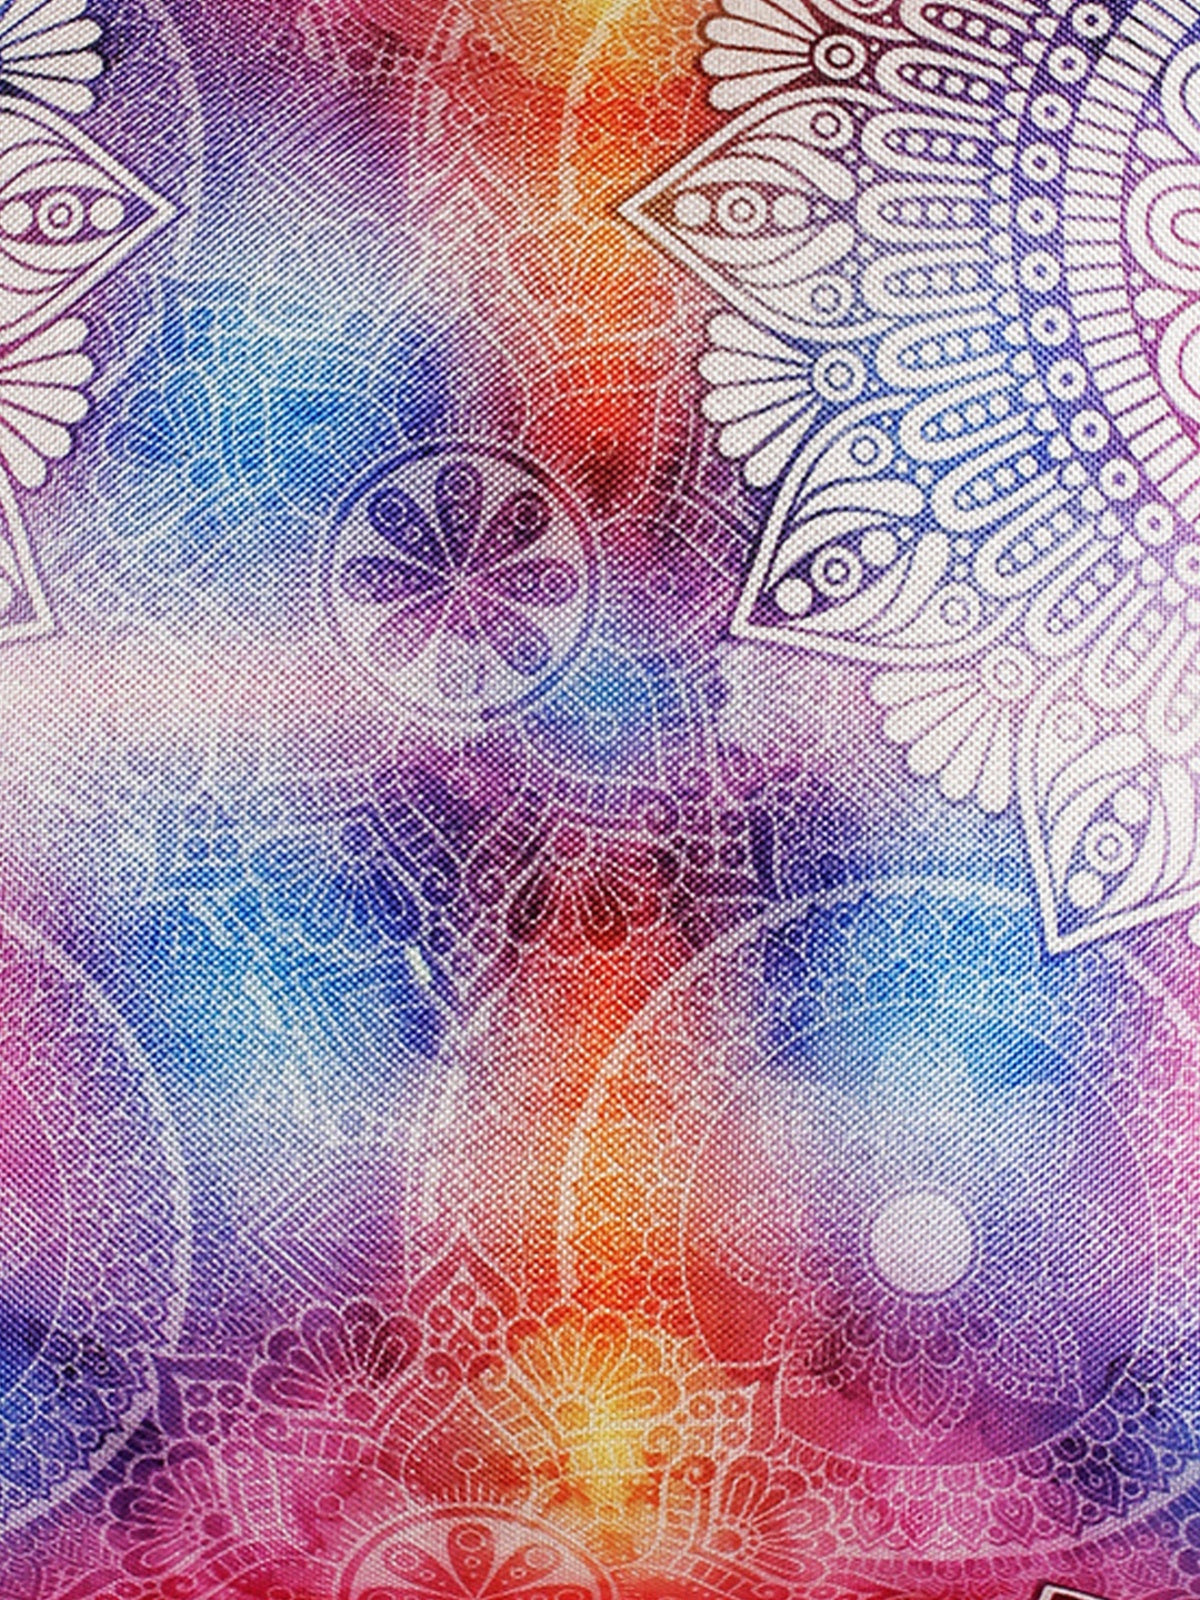 Mandala Jute Cushion Cover 16x16 Inch, Set of 5 - Multicolor